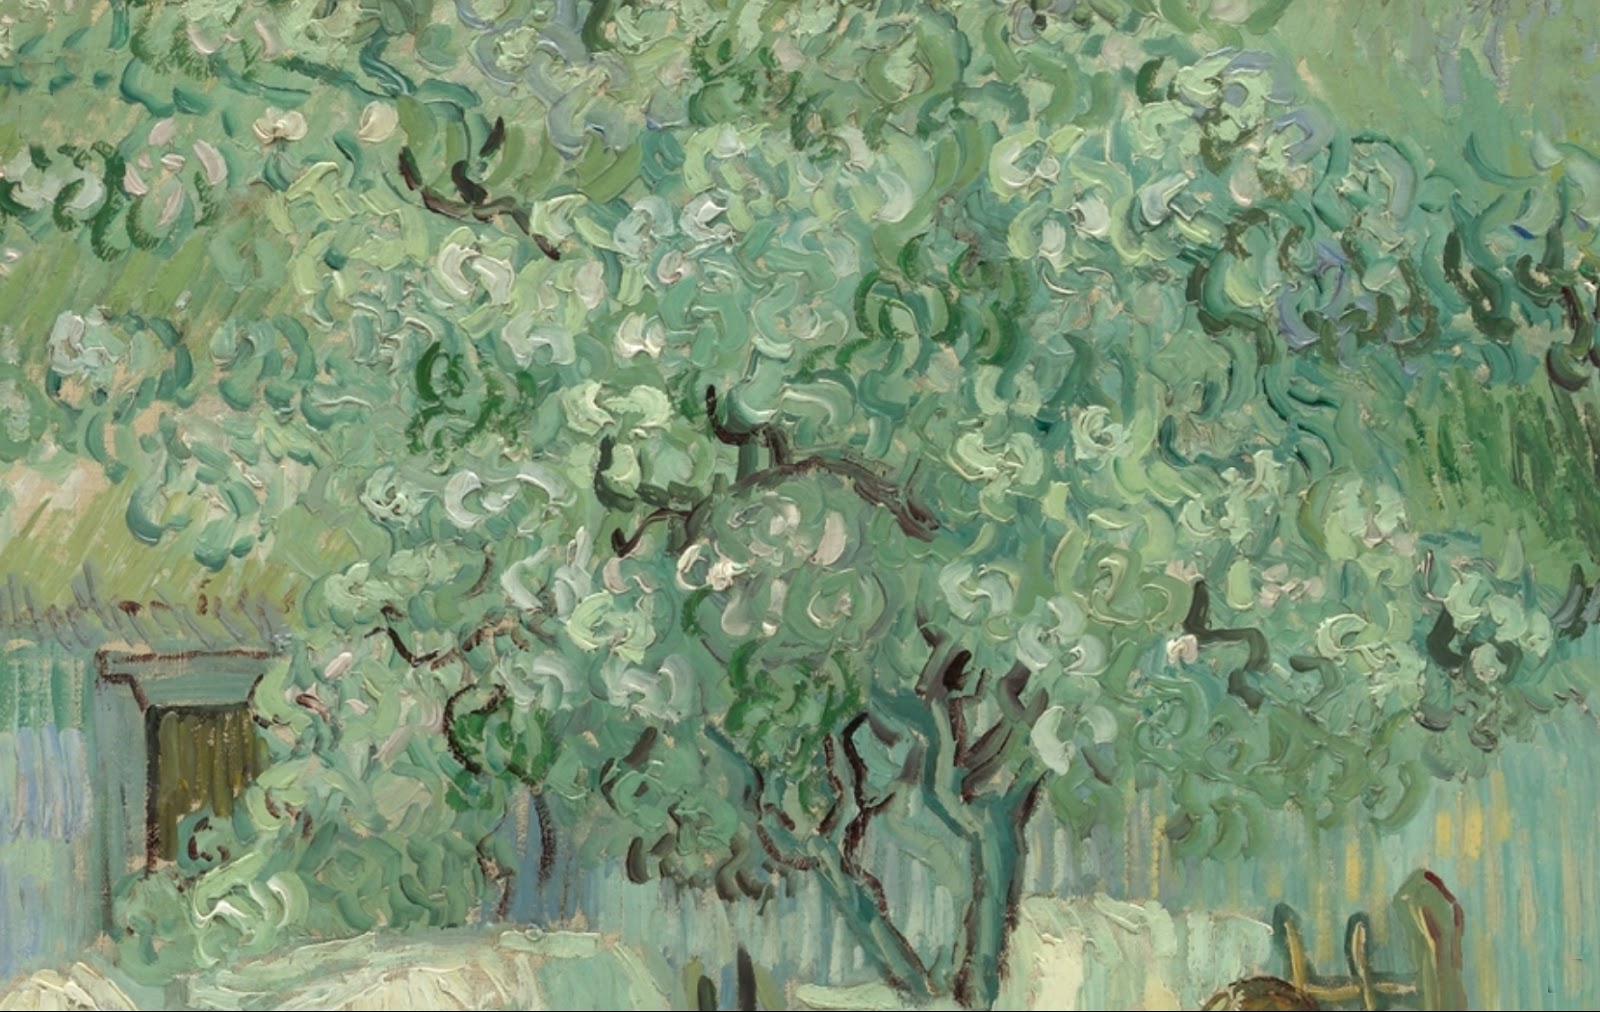 Vincent+Van+Gogh-1853-1890 (770).jpg